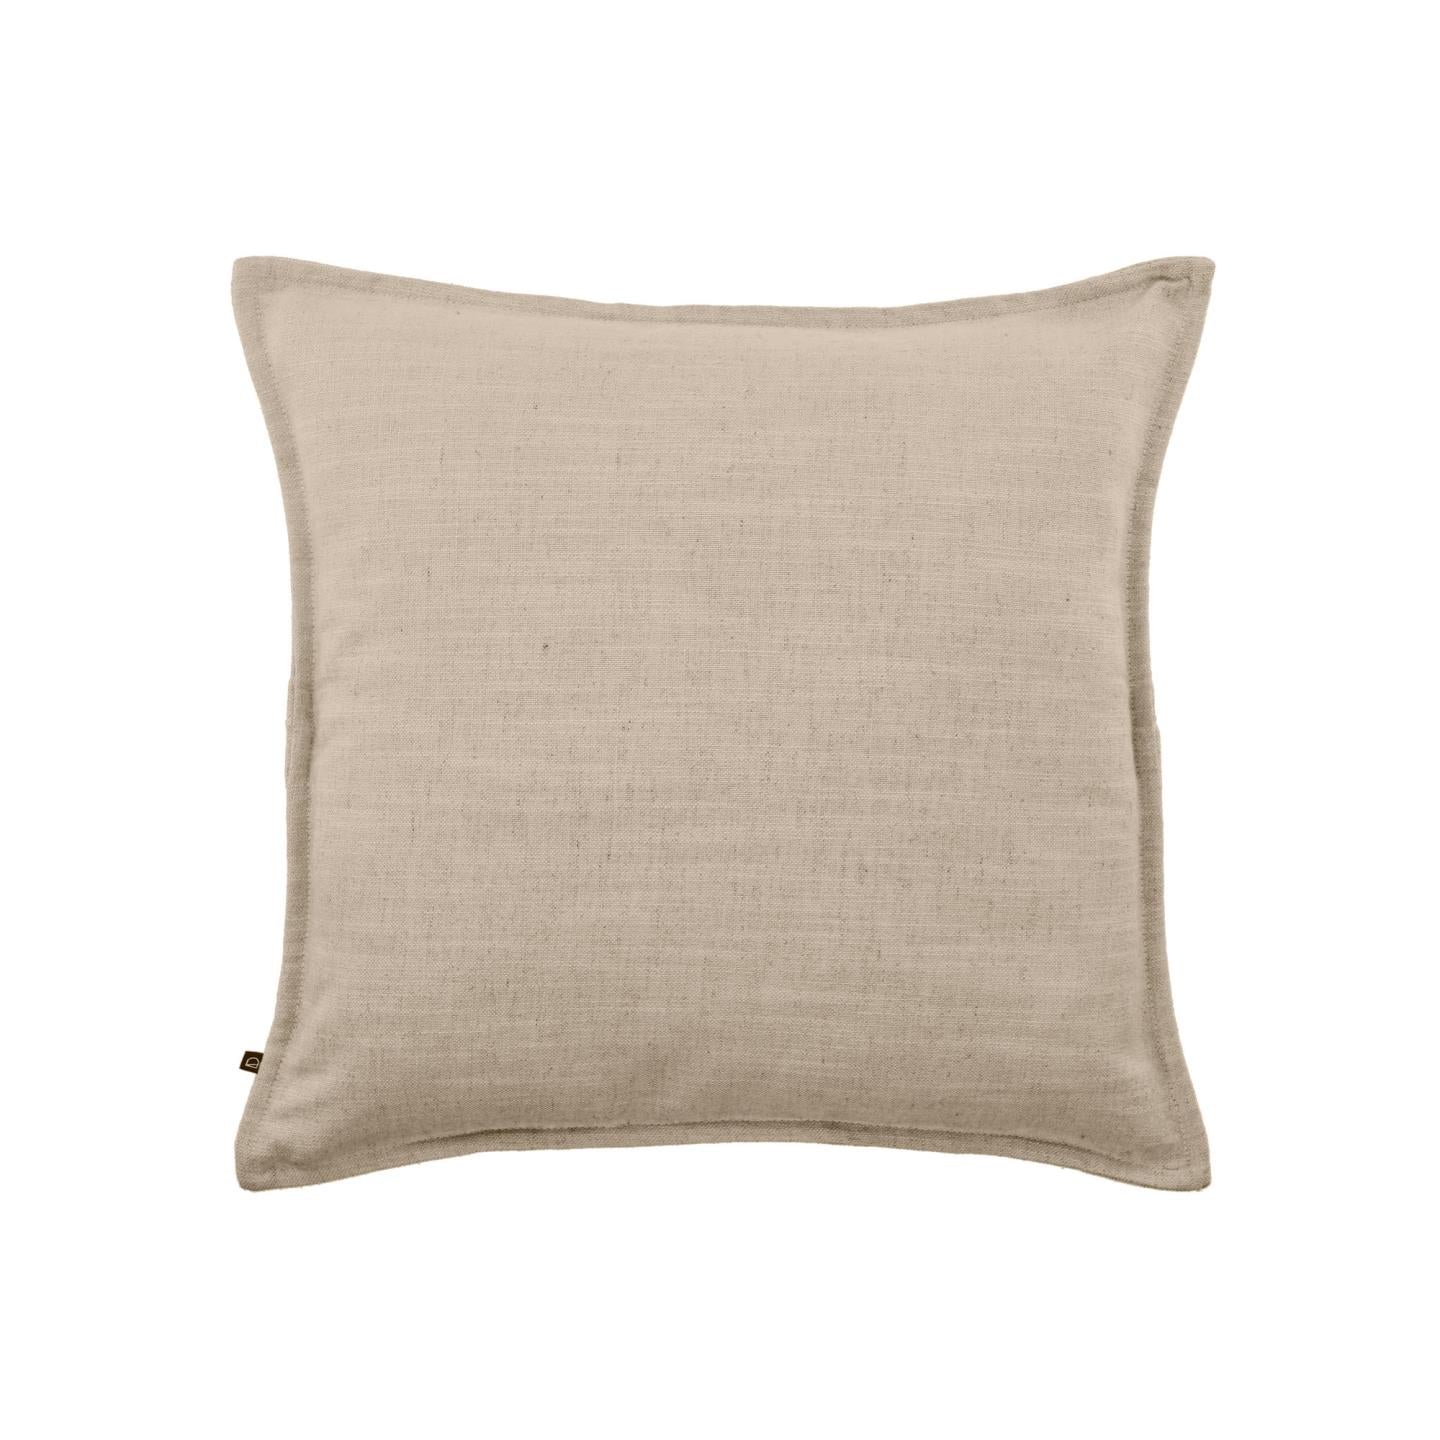 Blok cushion cover in beige linen, 45 x 45 cm